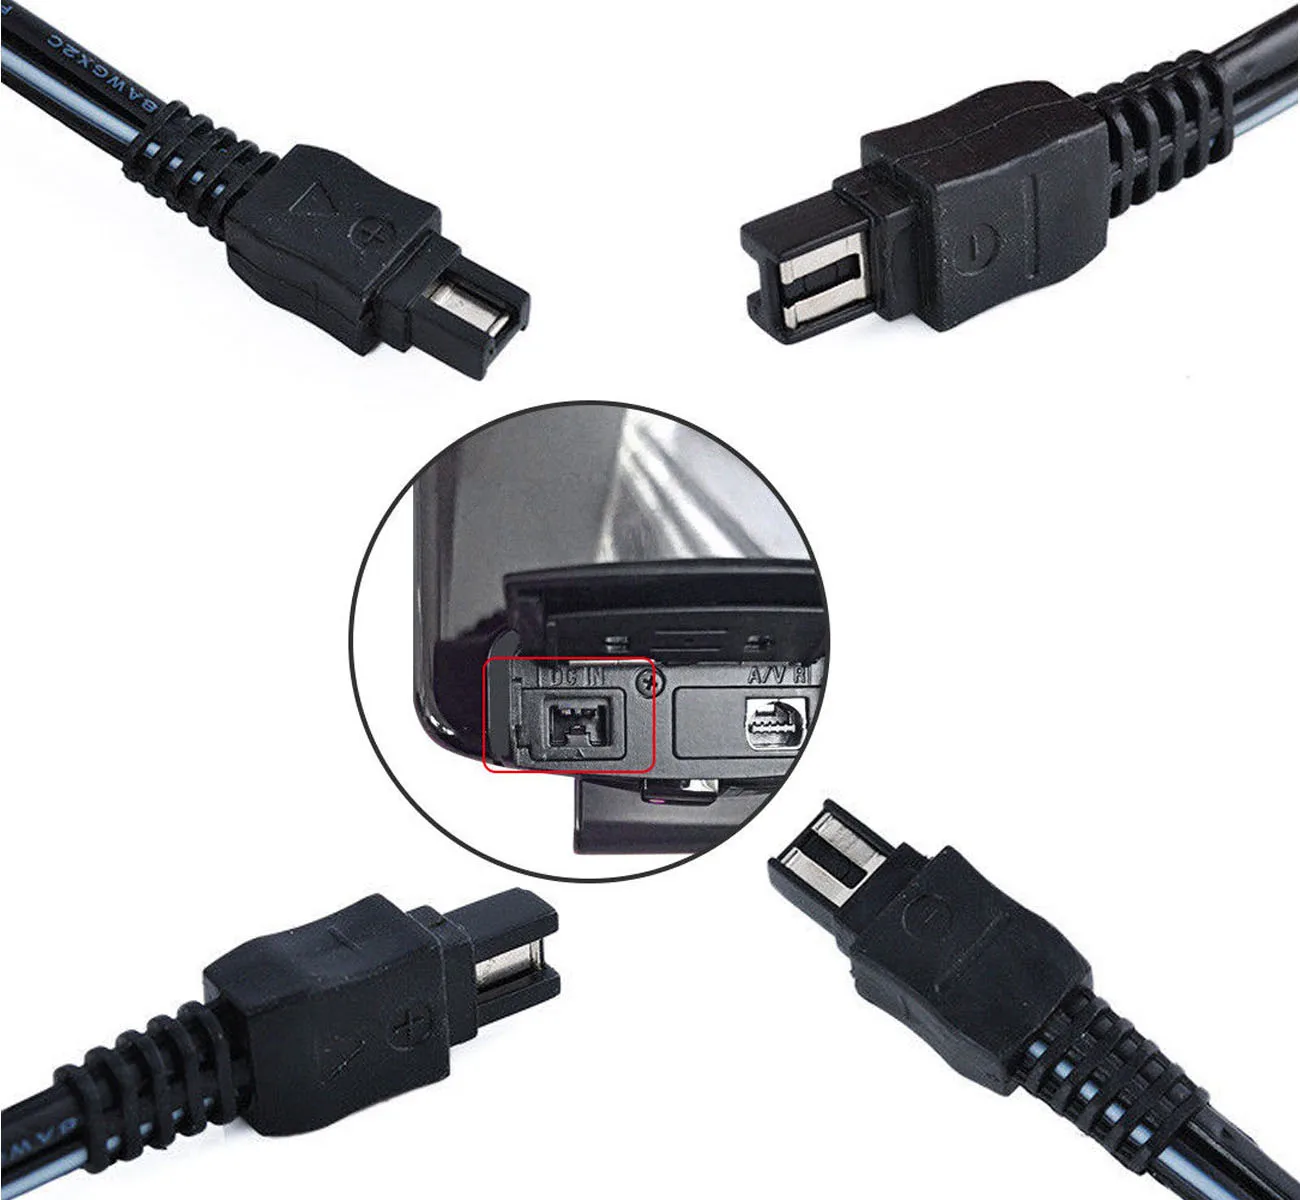 AC адаптер питания зарядное устройство для sony HDR-CX200E, HDR-CX210E, HDR-CX220E, HDR-CX230E, HDR-CX250E, HDR-CX260VE, Handycam видеокамеры